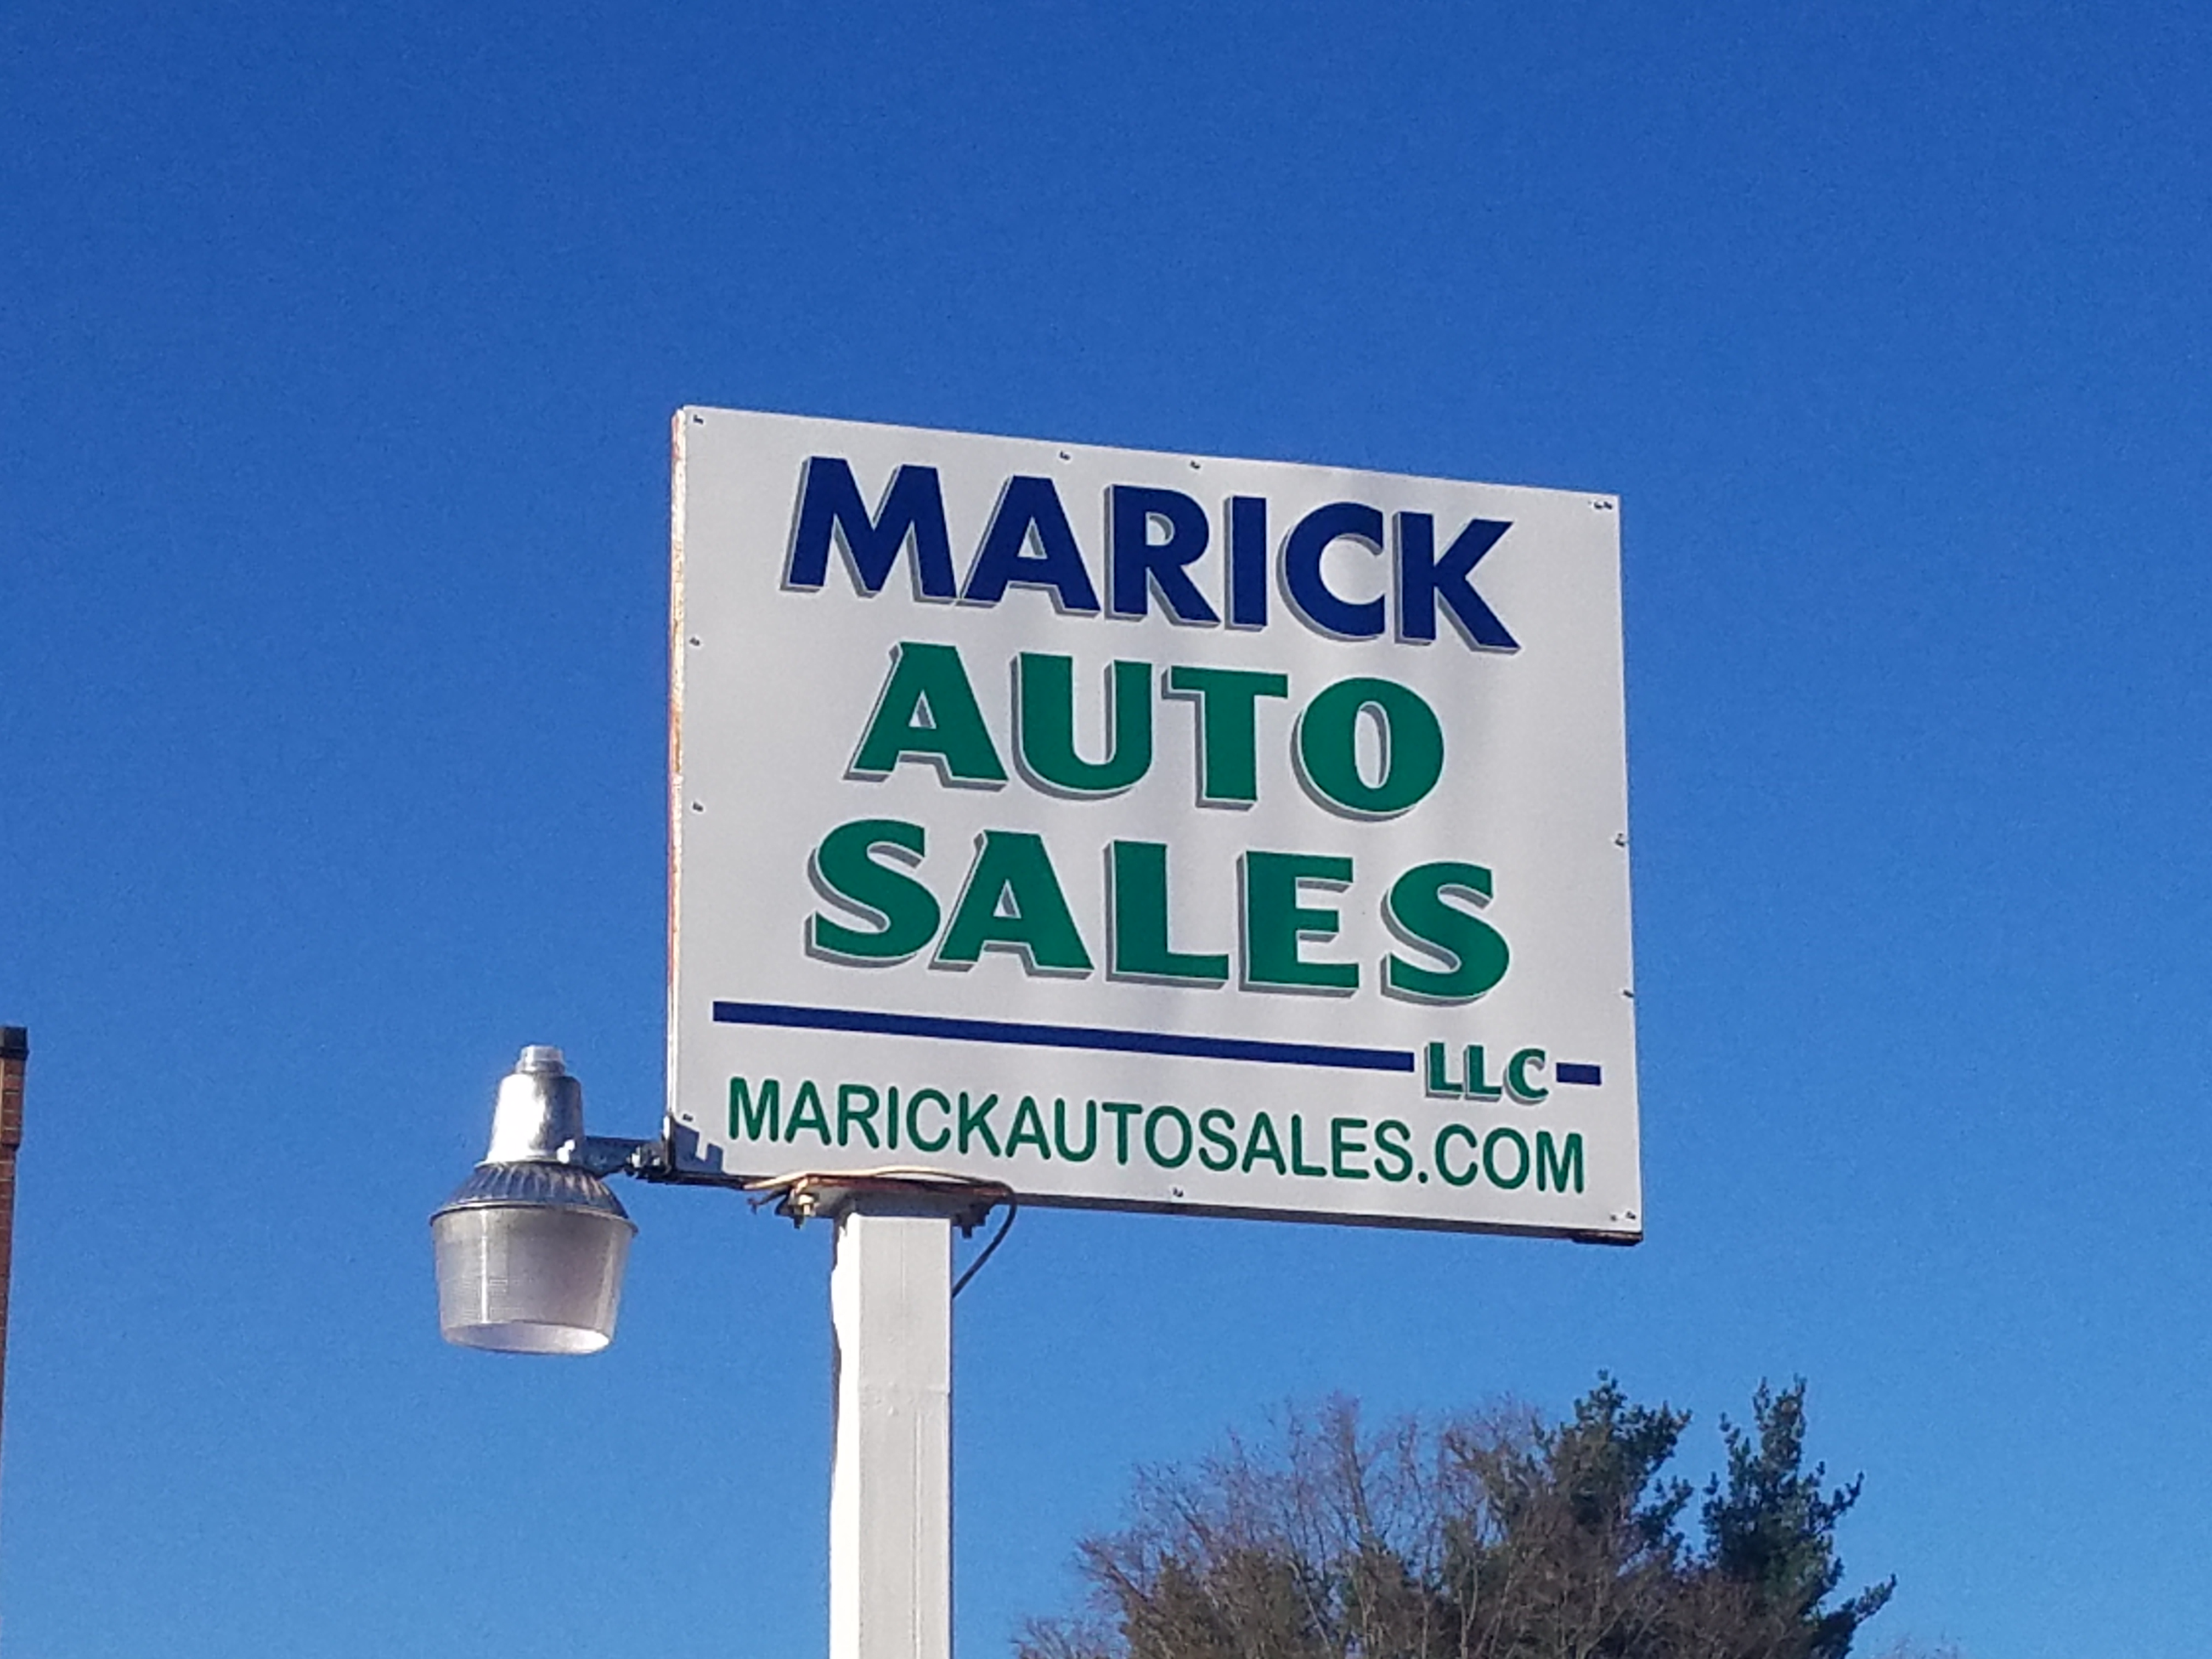 Marick Auto Sales LLC Photo